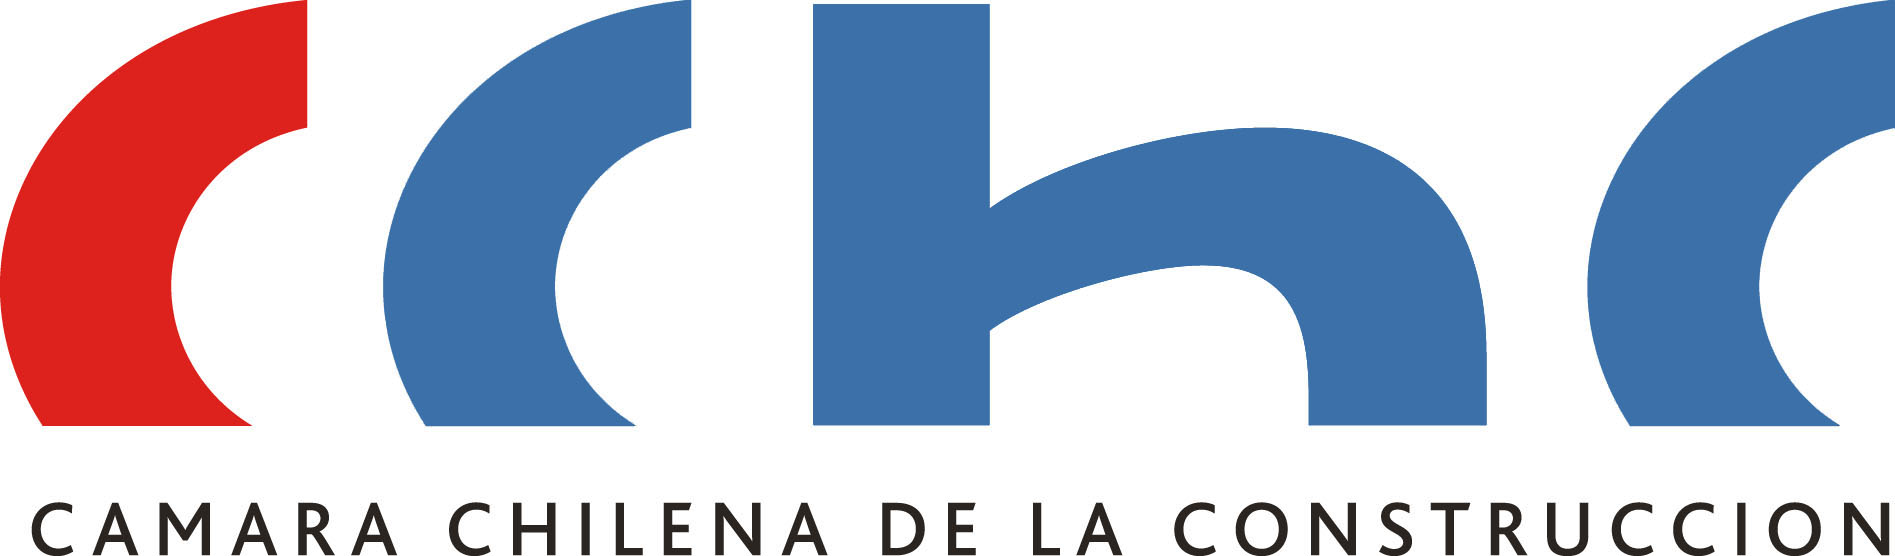 Logo-CChC4.jpg